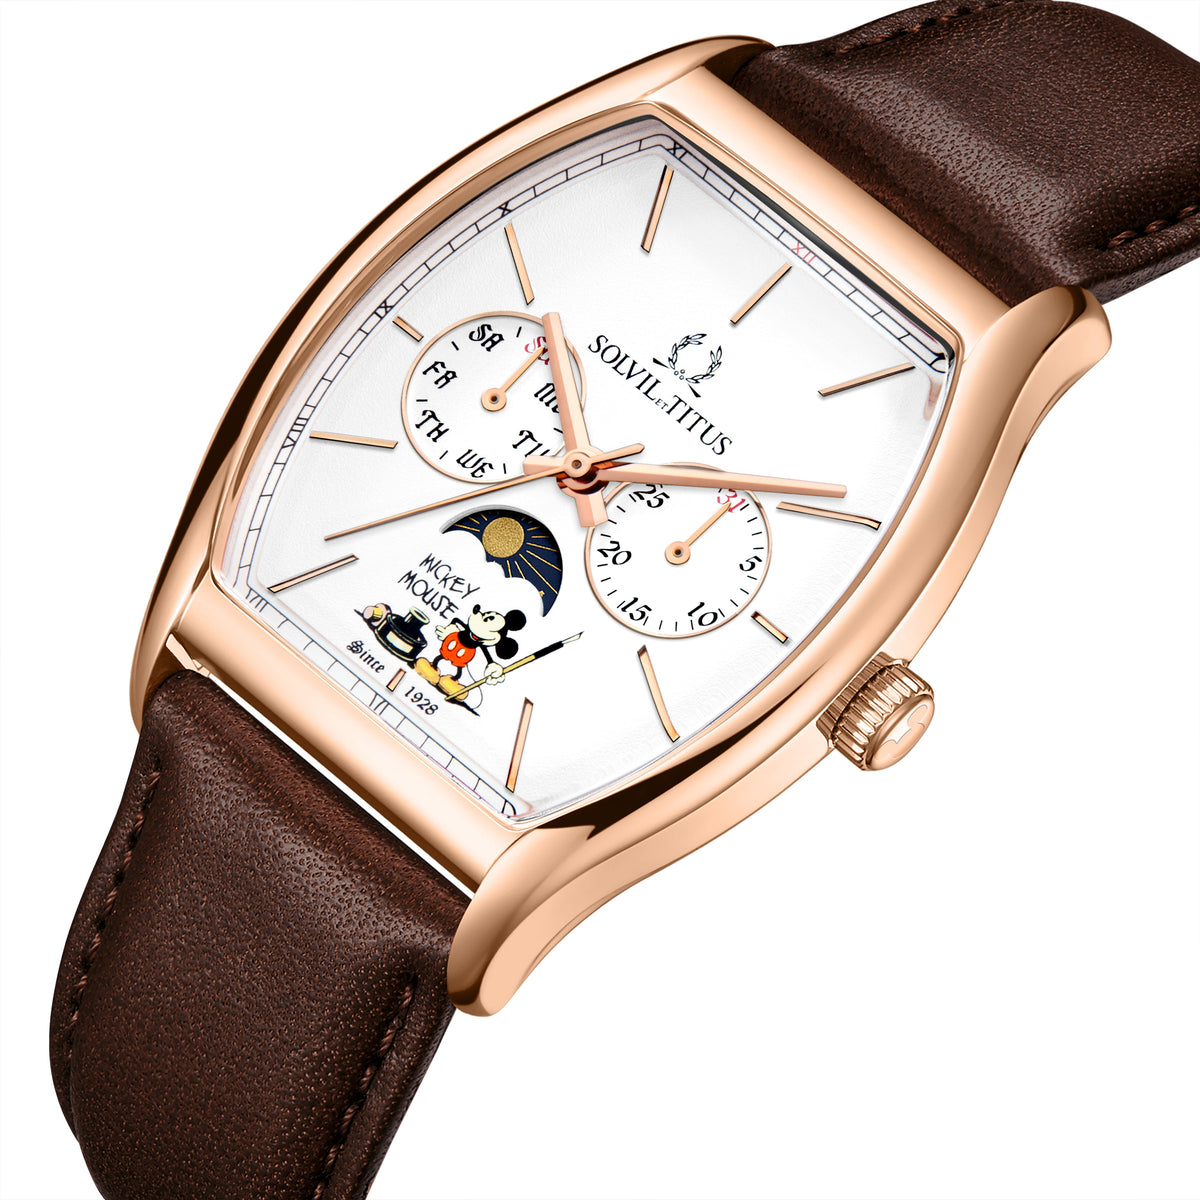 [Pre-Order] คอลเลกชัน Barista “Mickey Mouse 95th Anniversary” นาฬิกาผู้ชาย ลิมิเตดอิดิชัน เรือนสีโรสโกลด์ มัลติฟังก์ชัน บอกกลางวัน-กลางคืน ระบบควอตซ์ สายหนัง ขนาดตัวเรือน 37 มม. (W06-03355-002)